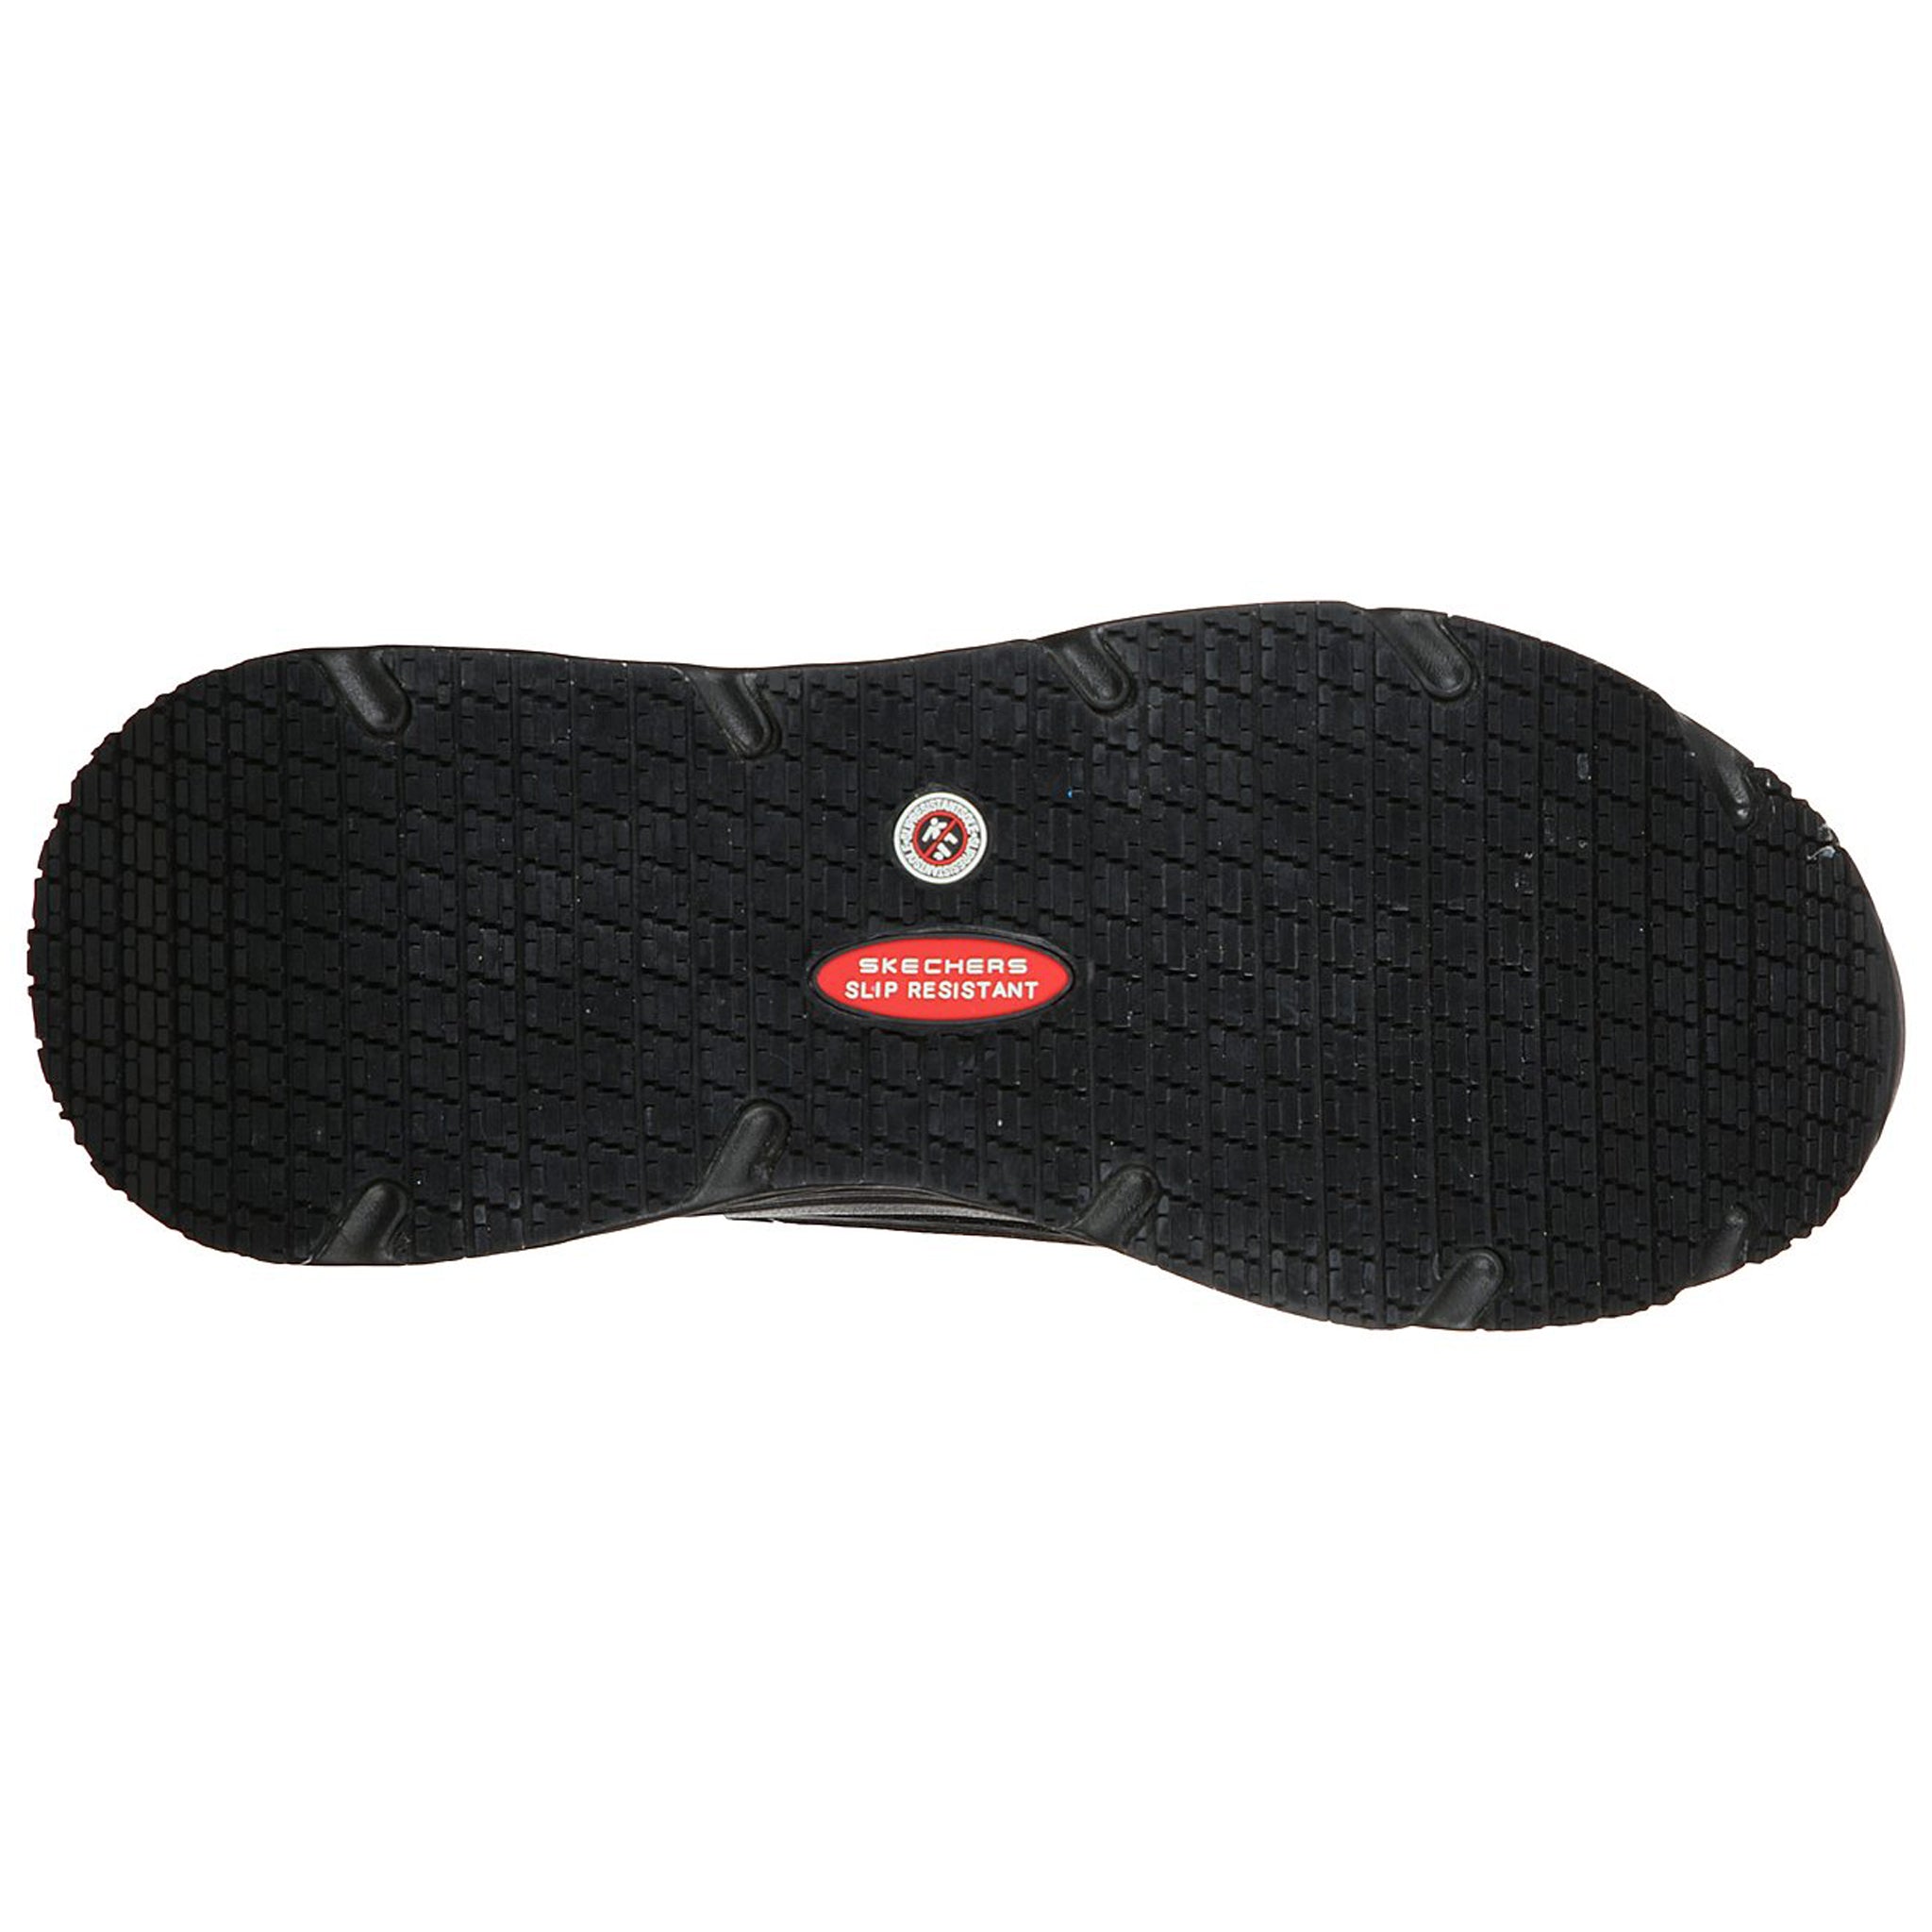 Skechers Men's 200021 Max Cushioning Elite SR Rytas Slip Resistant Wor – Shoe Store More